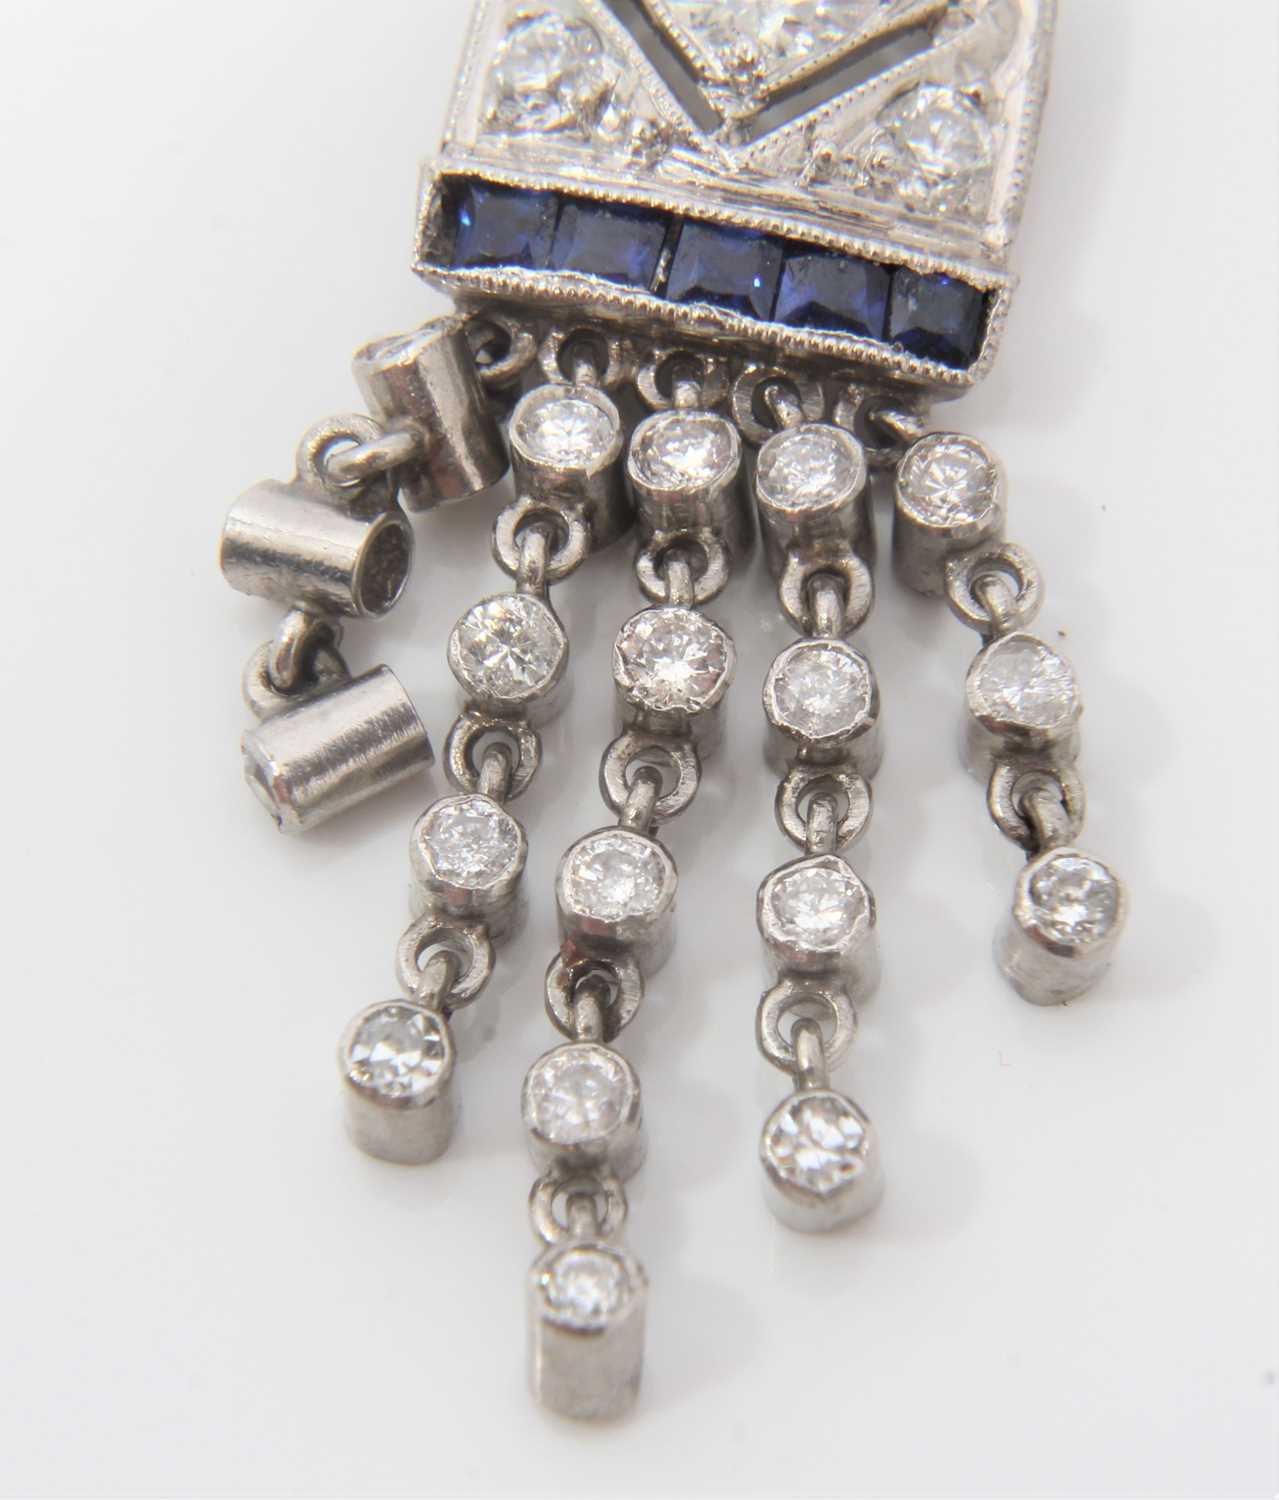 Edwardian style Belle Époque diamond and sapphire pendant necklace - Image 9 of 9